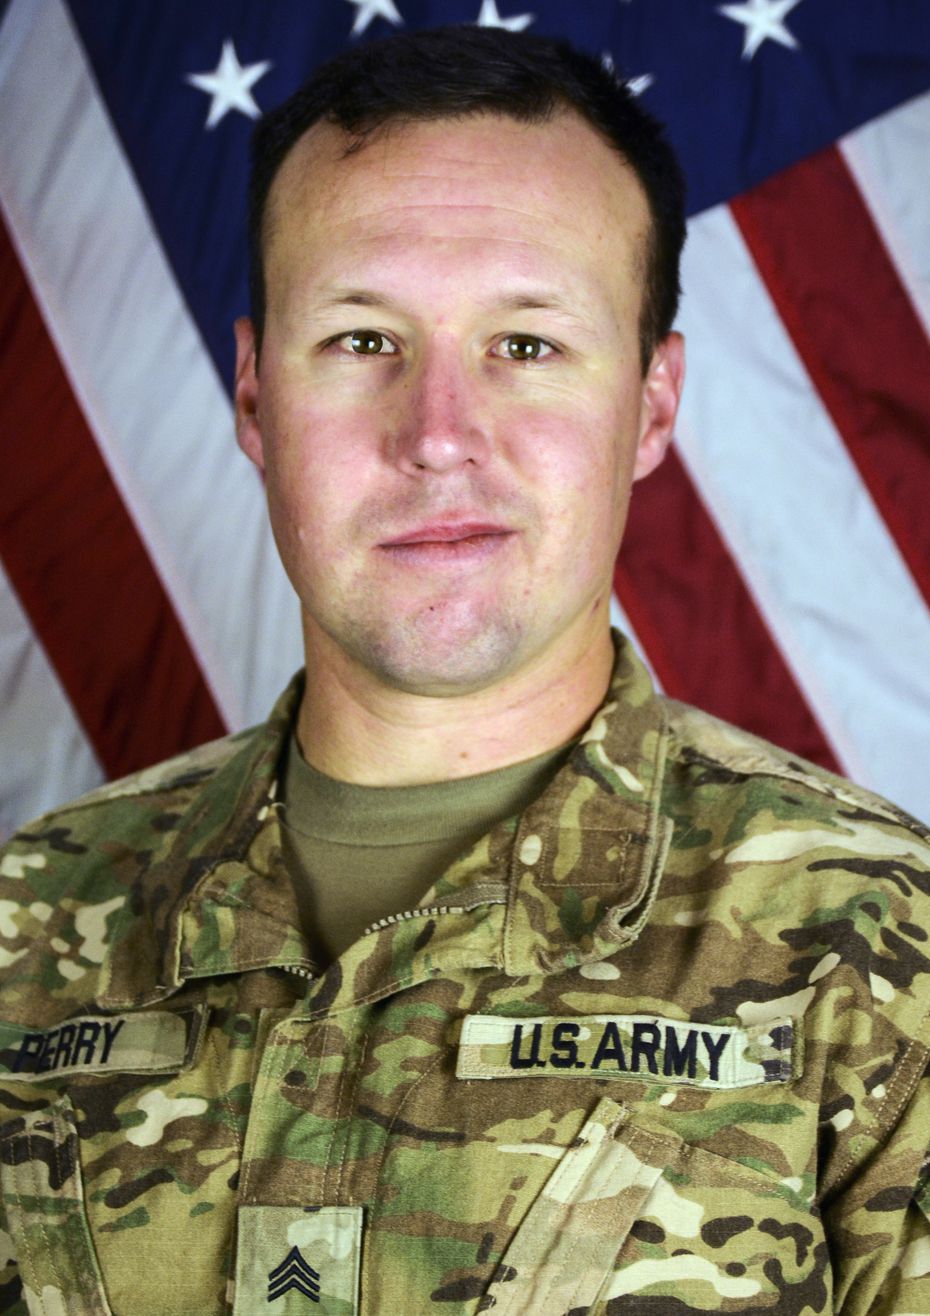 U.S. Army Sgt. John W. Perry of Stockton, Calif. 